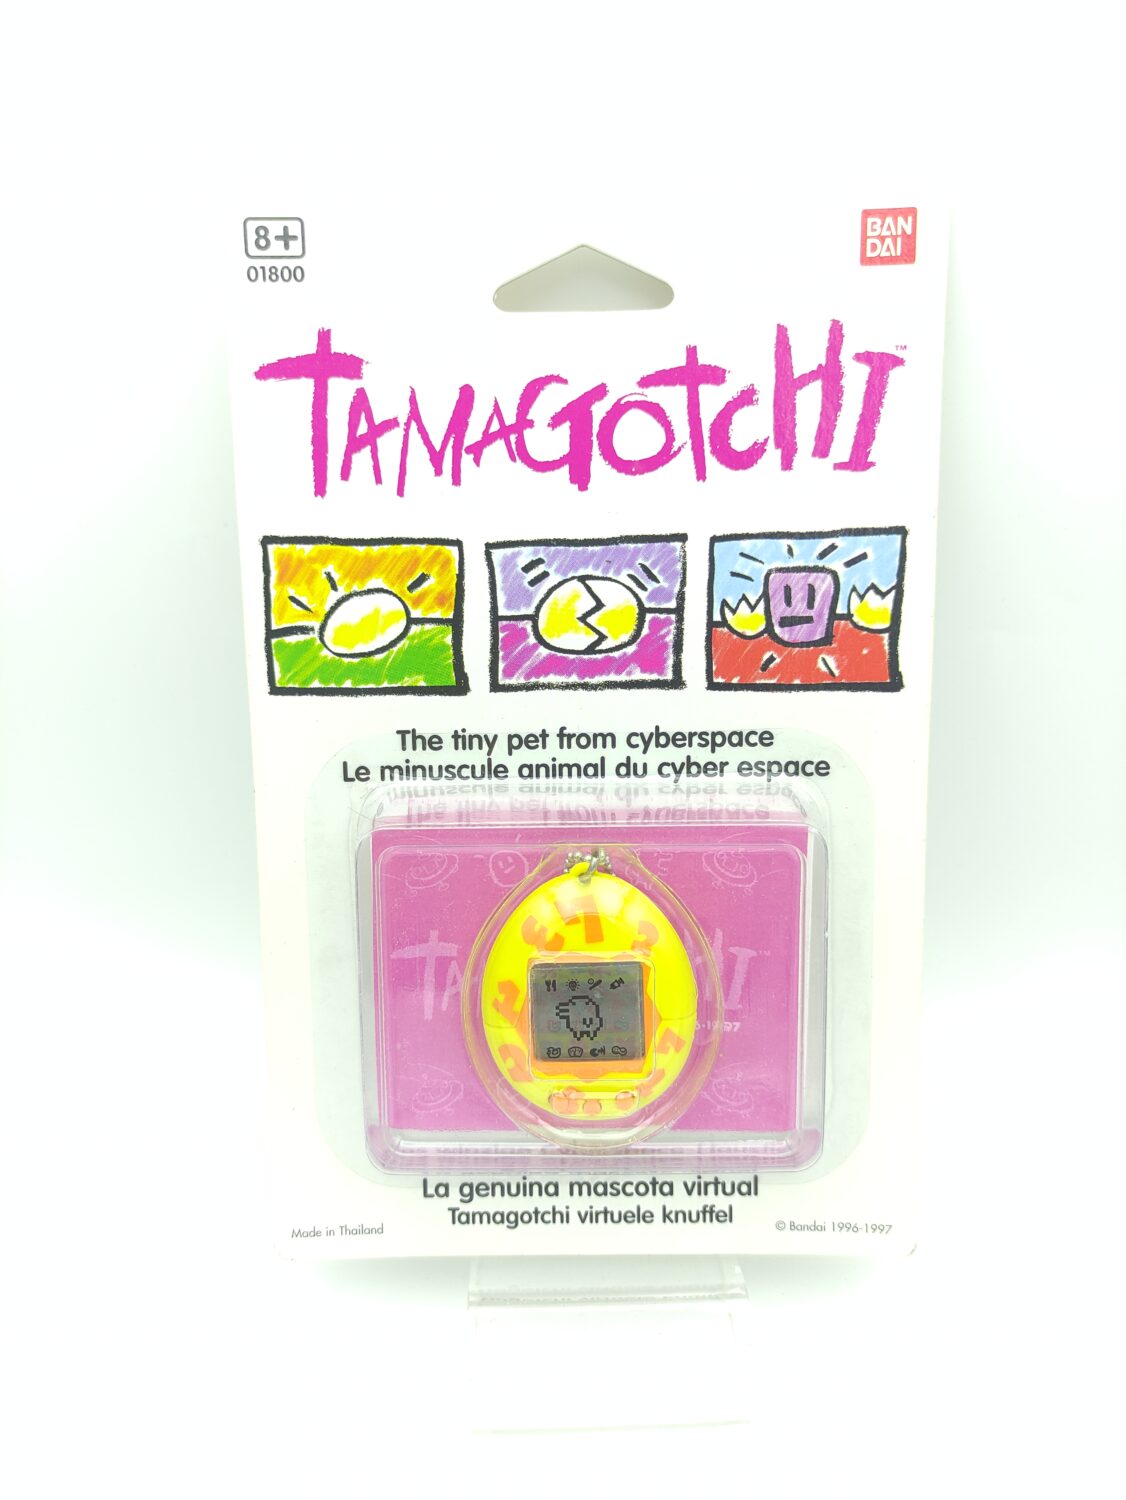 Tamagotchi Original P1/P2 yellow w/ orange Bandai 1997 English